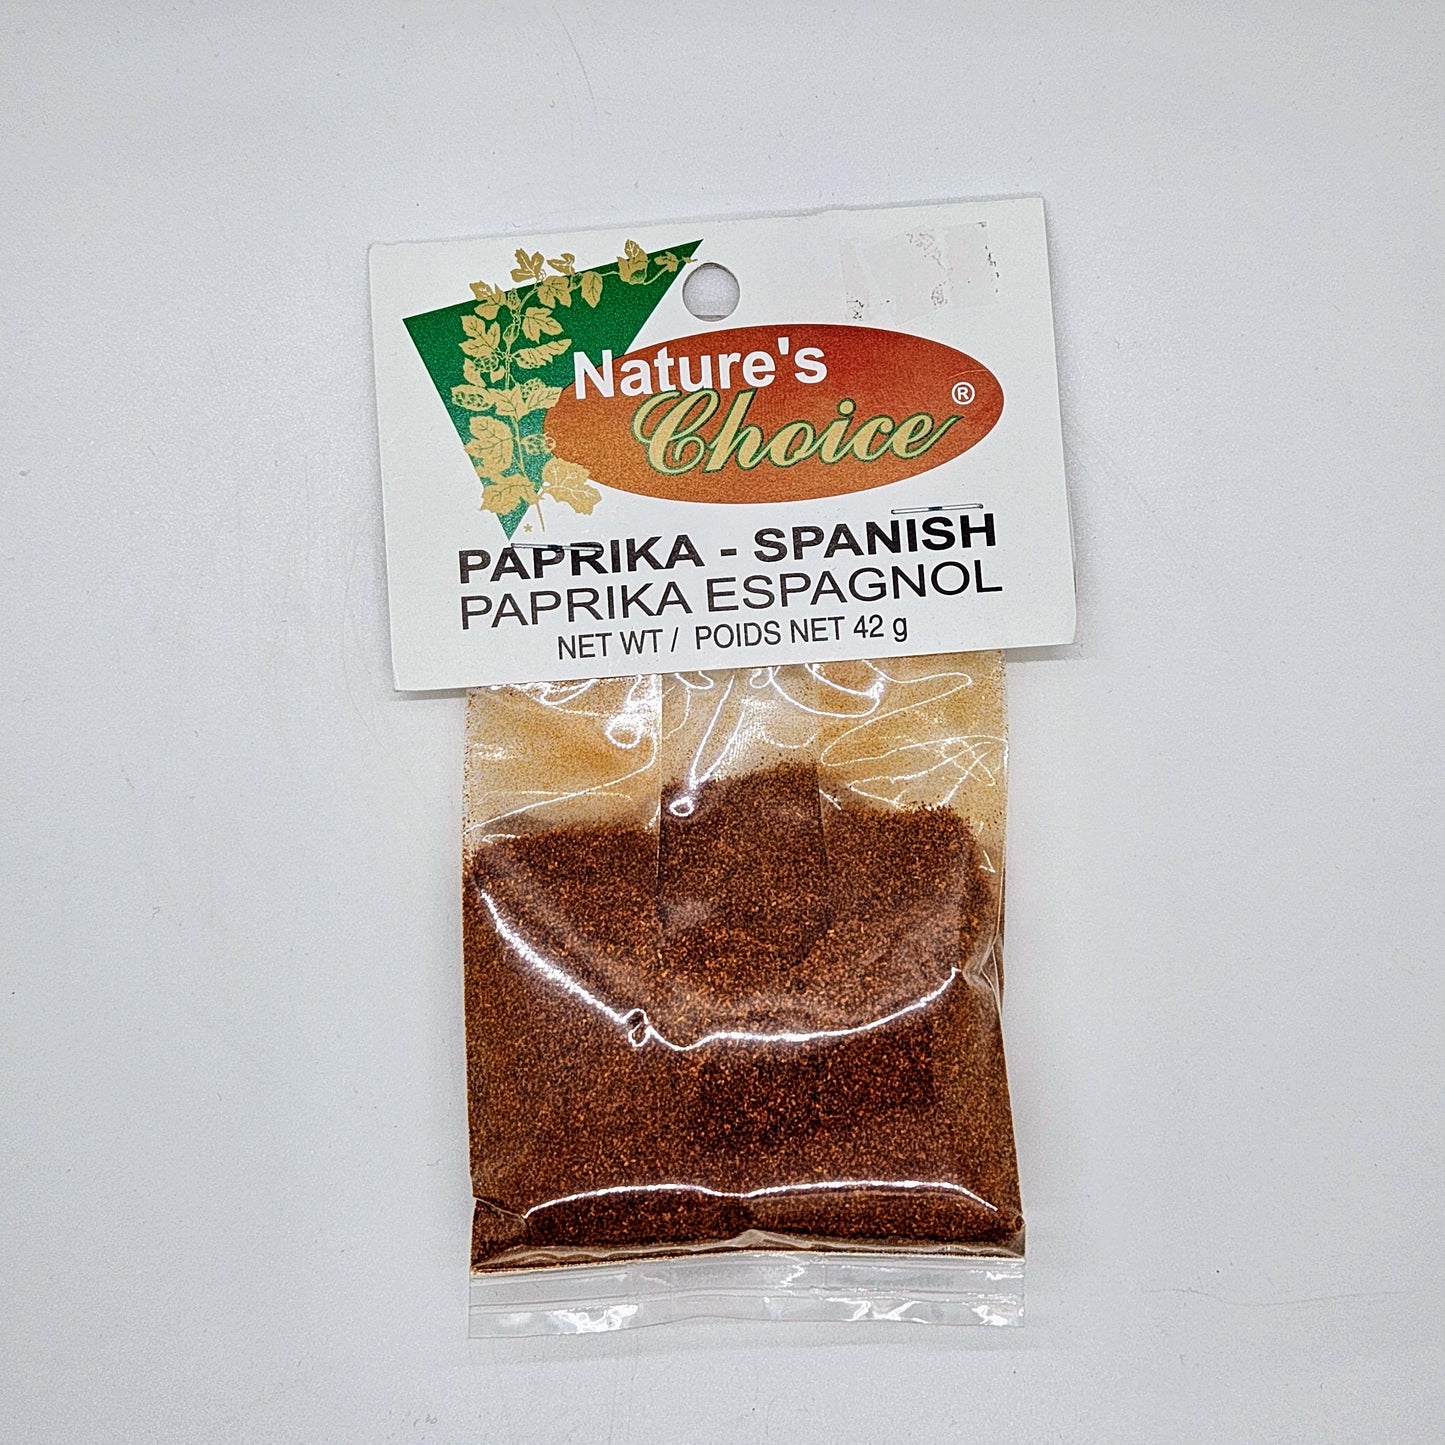 Paprika- Spanish